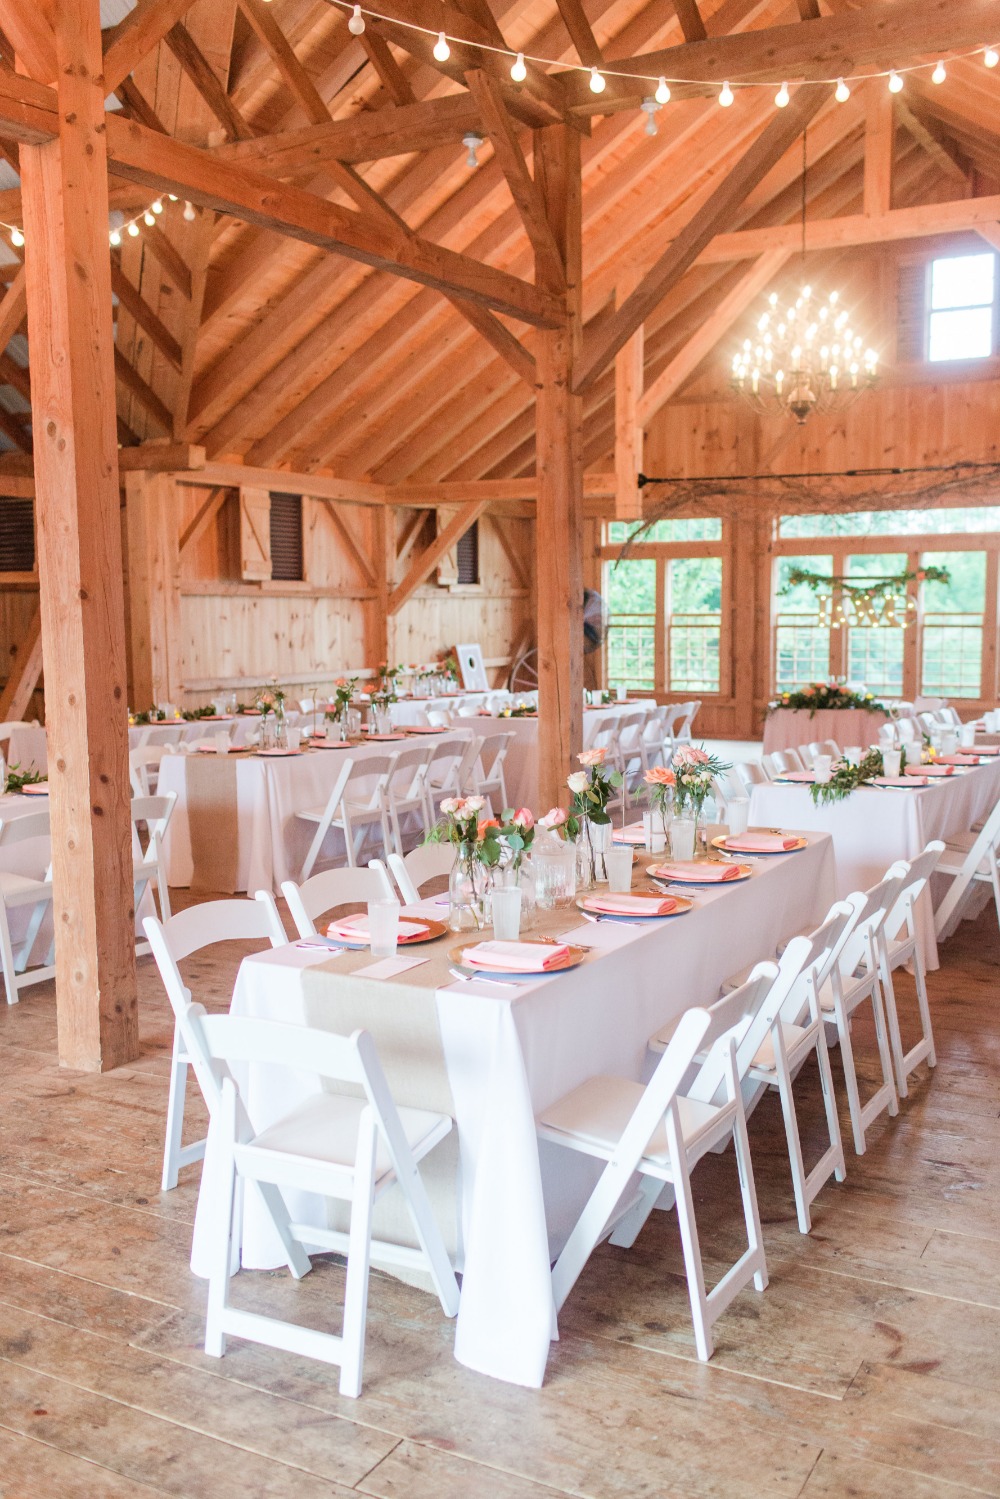 Rustic barn reception